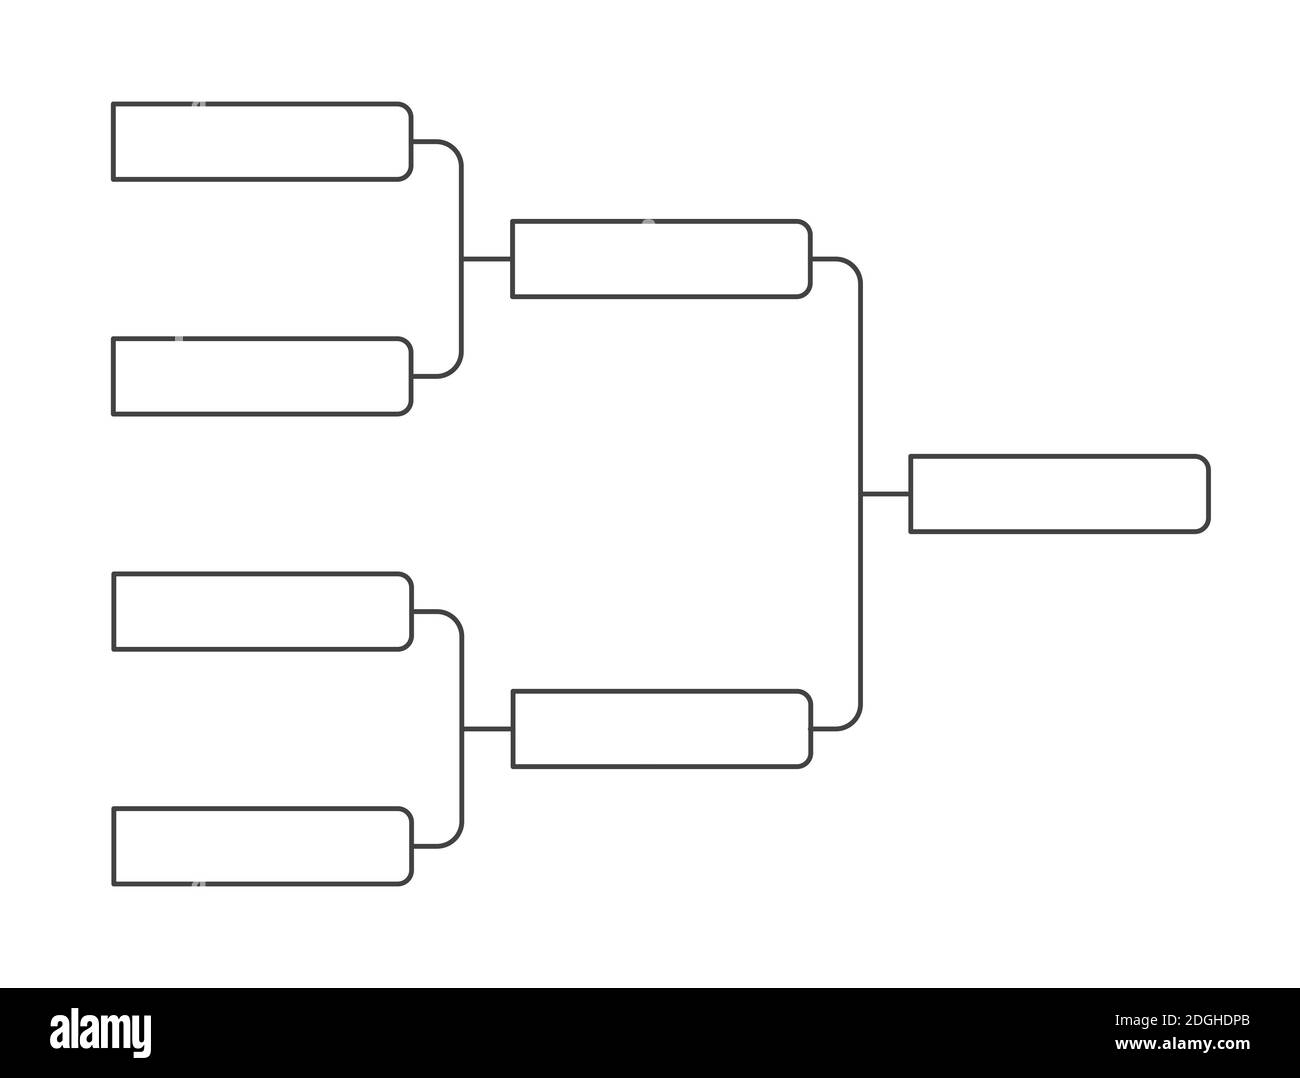 4-team-tournament-bracket-championship-template-flat-style-design-vector-illustration-isolated